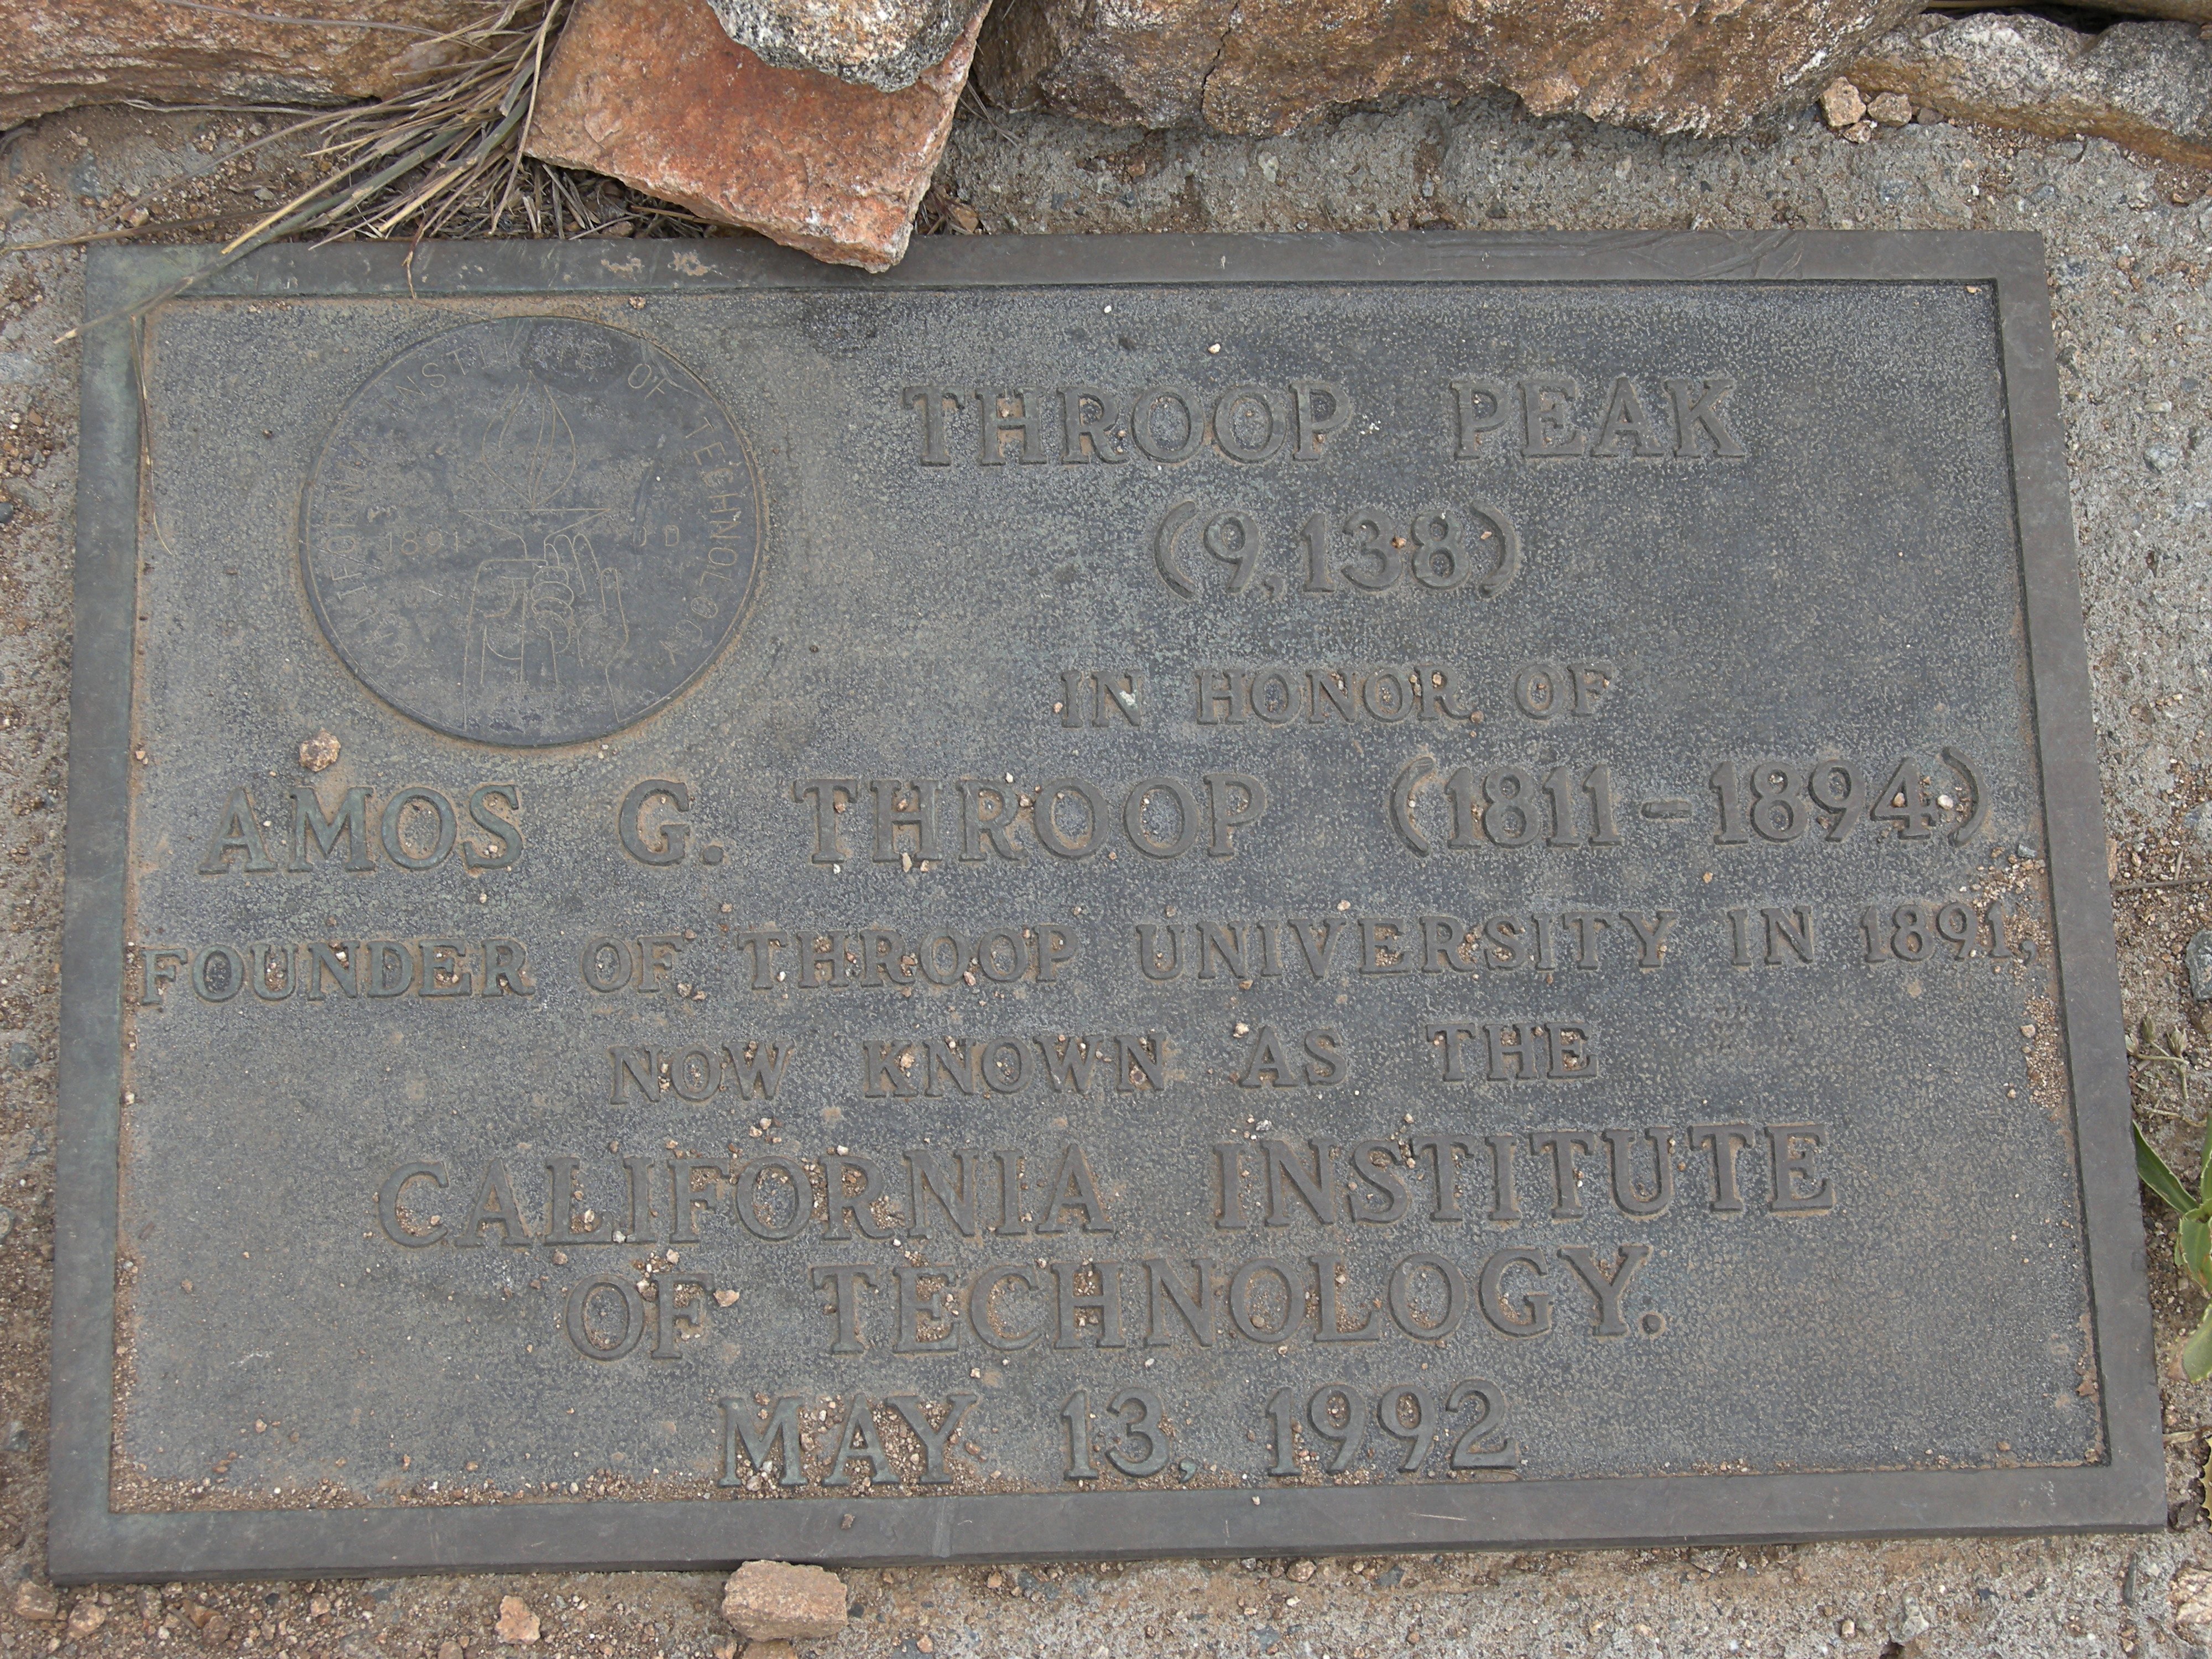 Plaque on Throop Peak